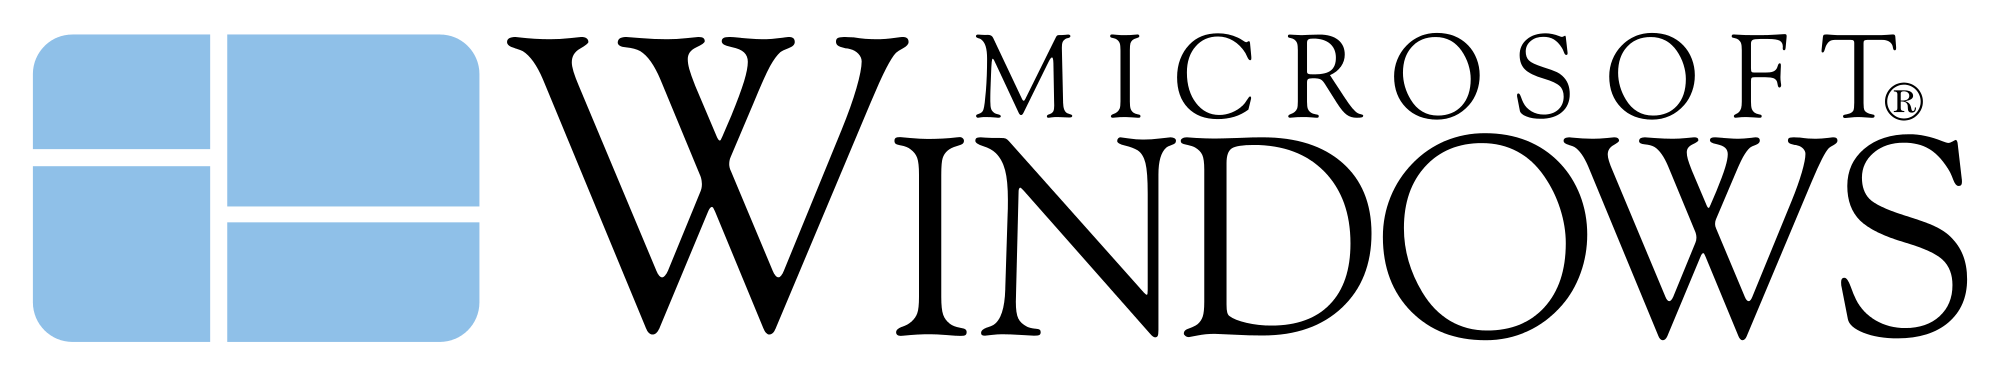 Windows 1 Logo - File:Microsoft Windows 1 0.svg - Wikimedia Commons